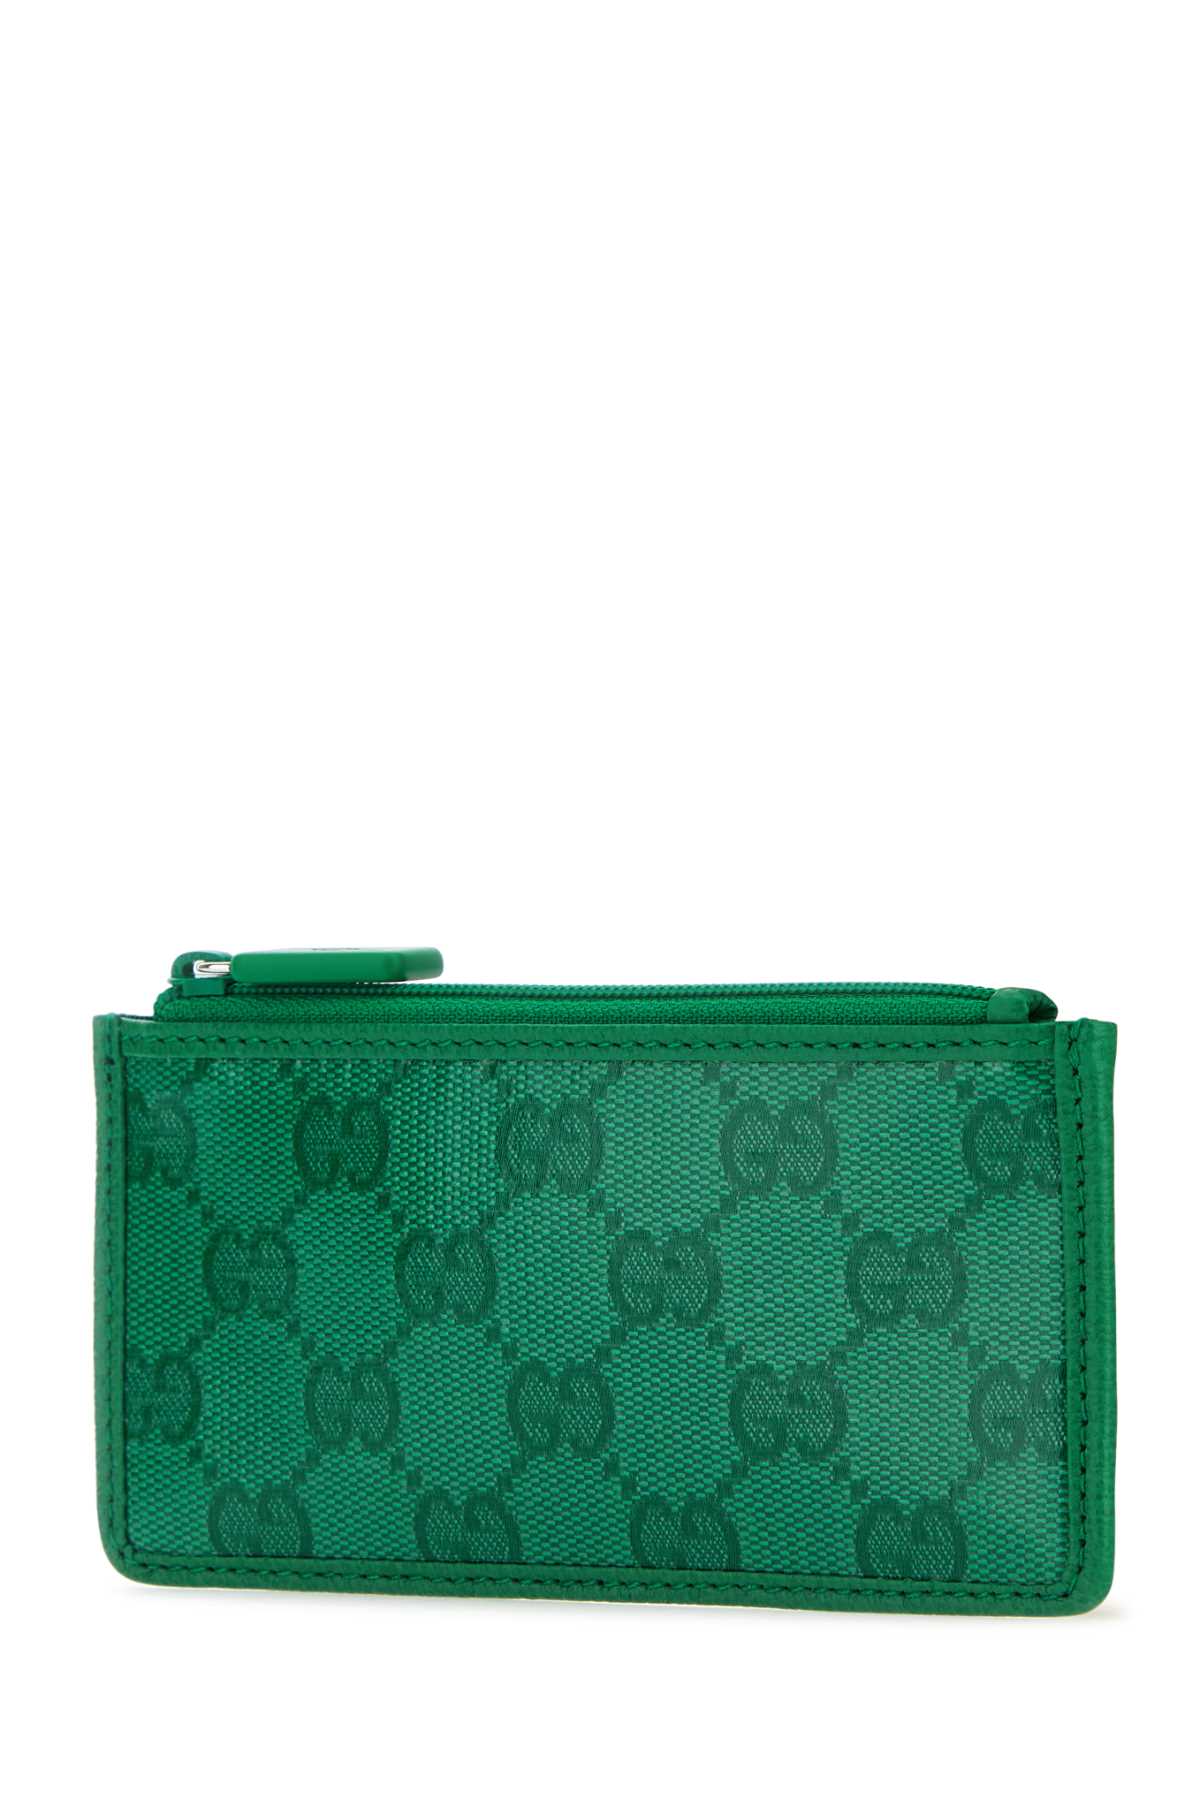 Shop Gucci Grass Green Gg Crystal Fabric Card Holder